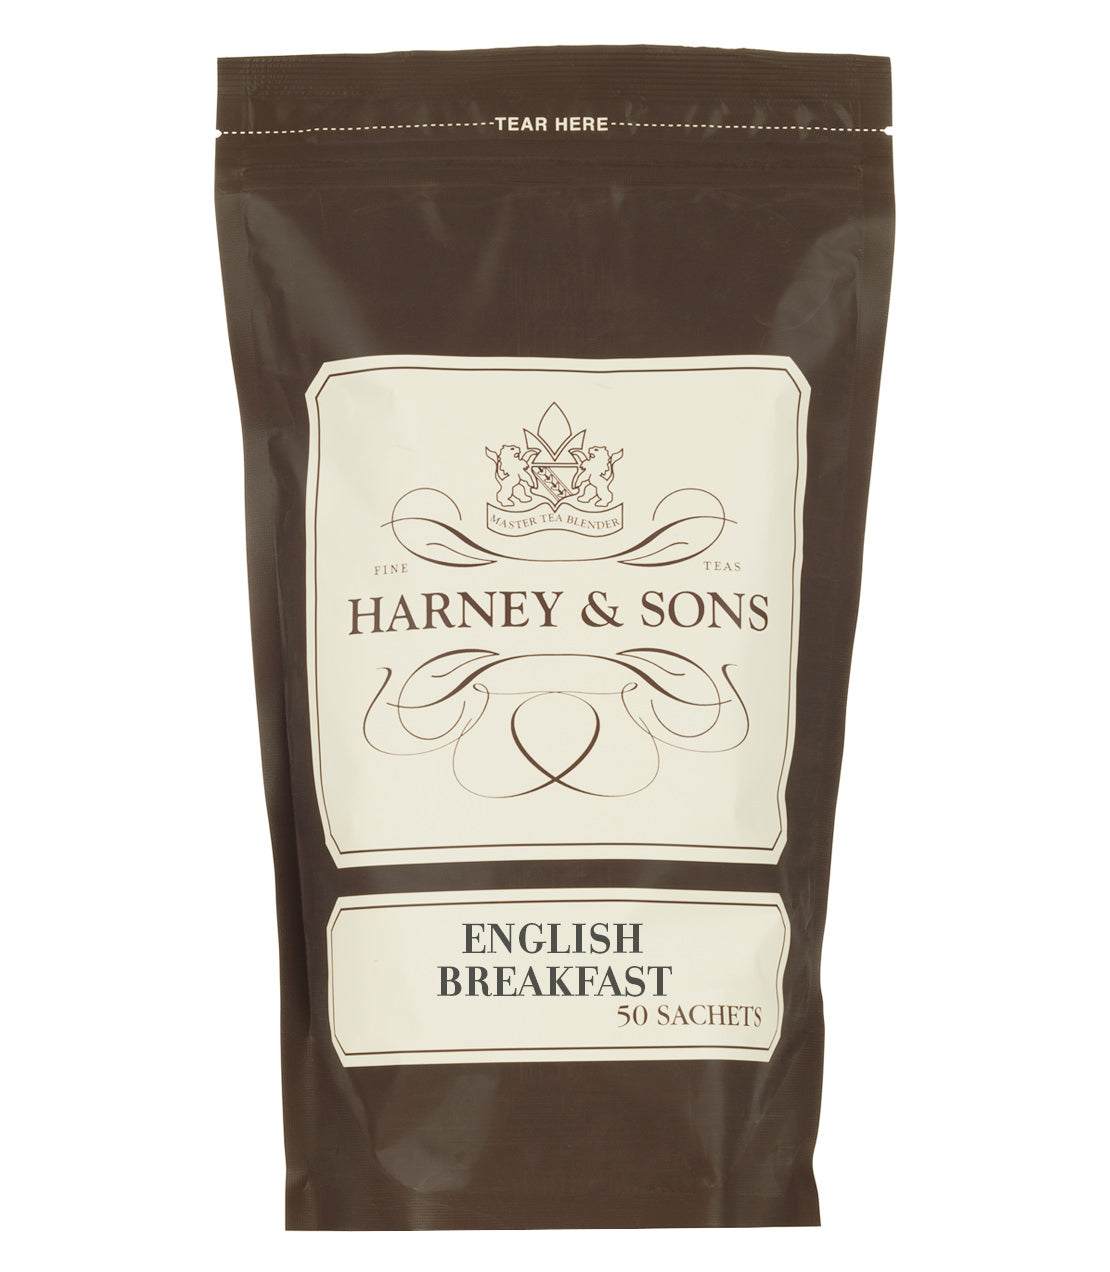 Tea English Breakfast organic 20 bags ENGLISH TEA SHOP